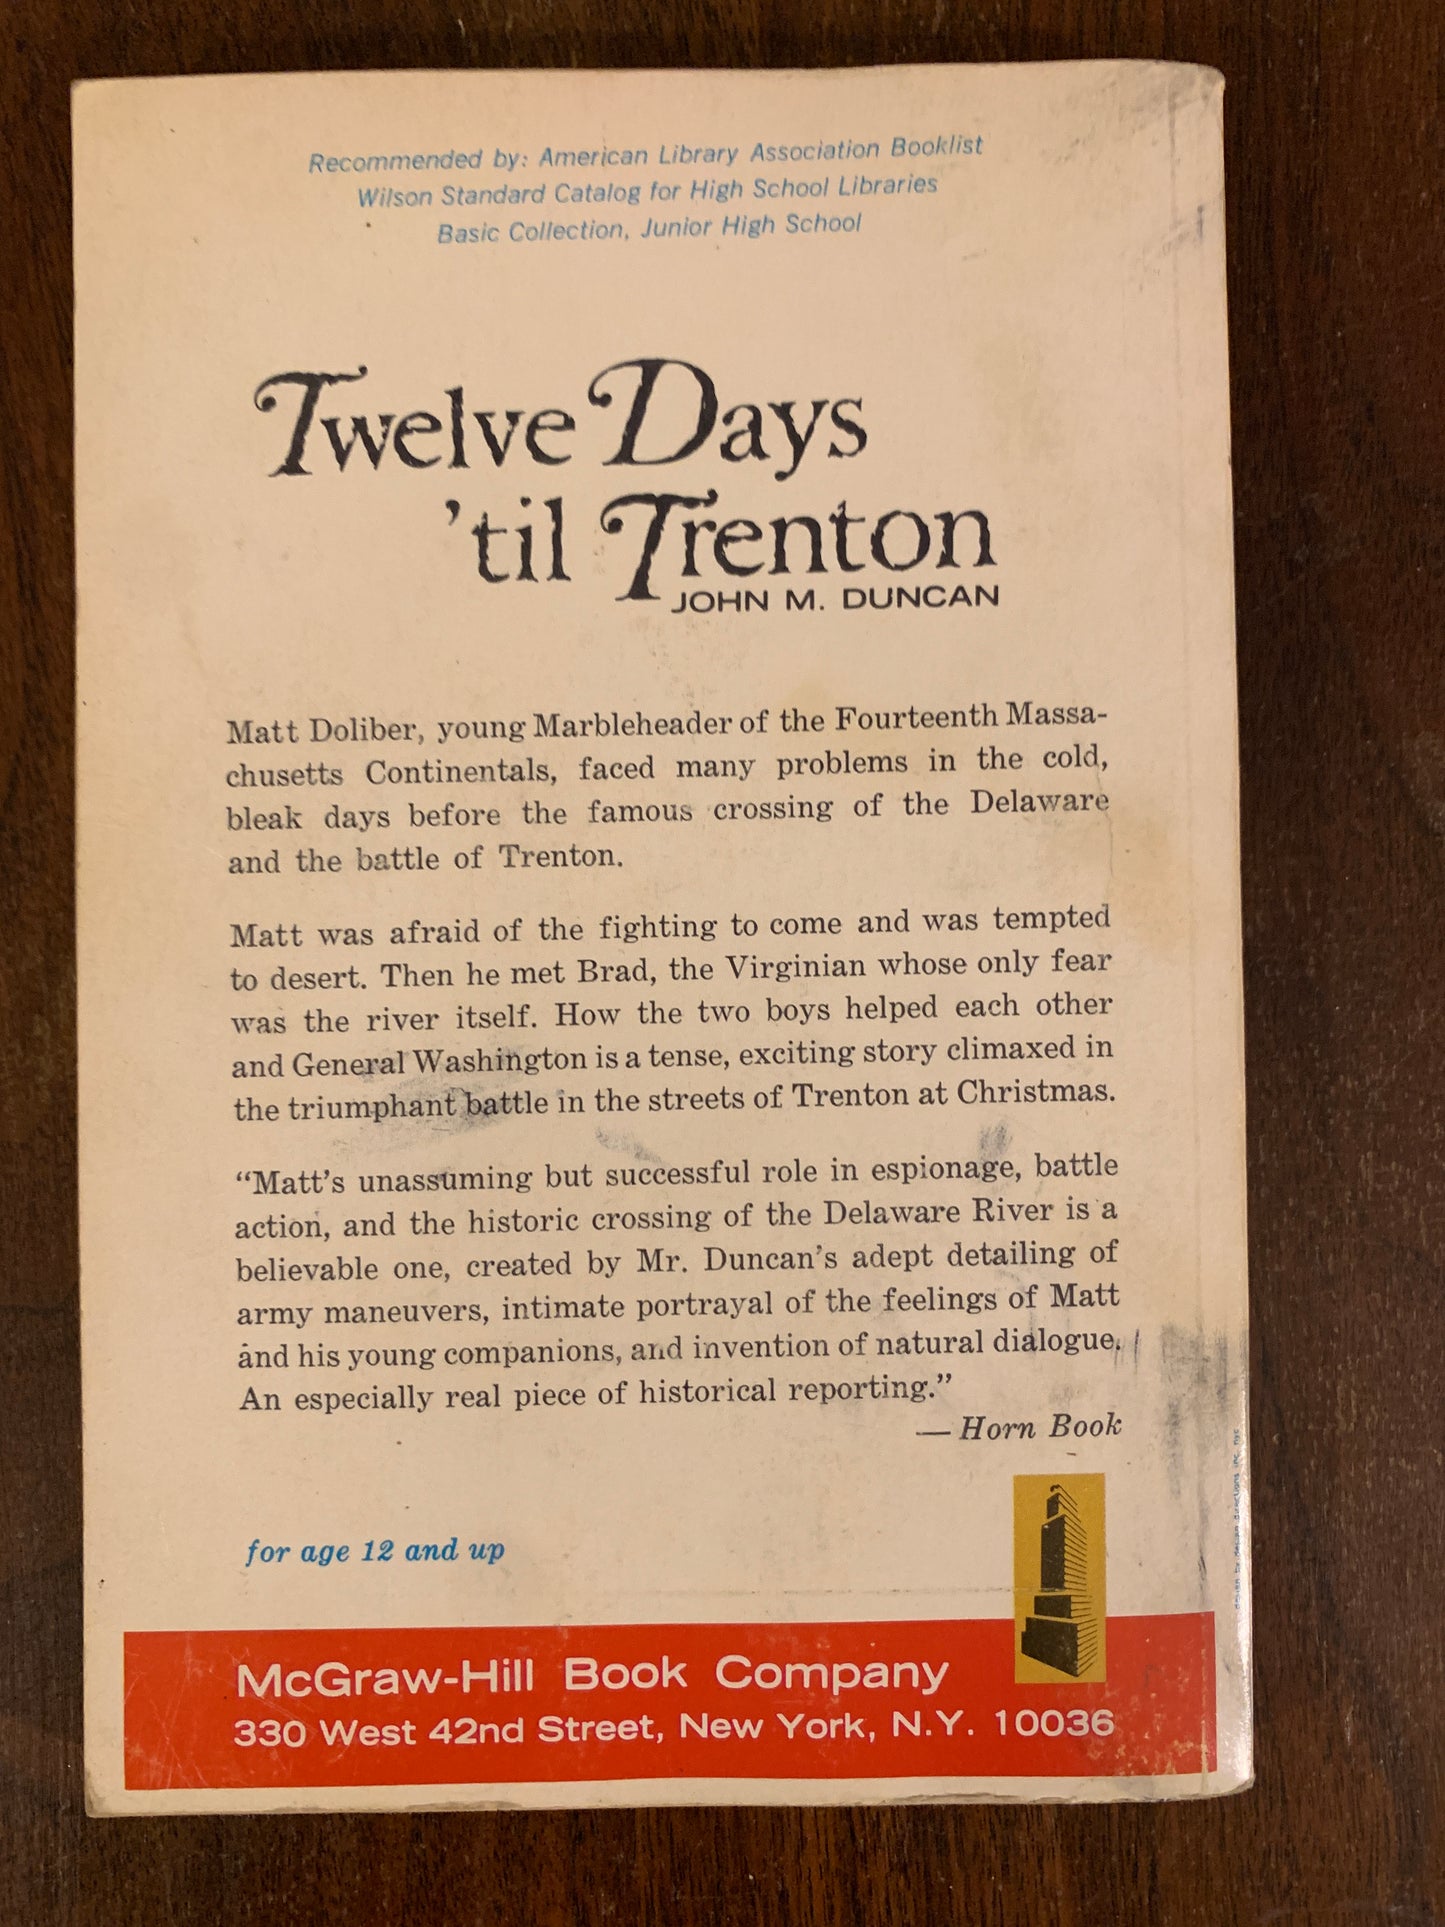 Twelve Days til Trenton by John M. Duncan, Young Pioneer Book 1966